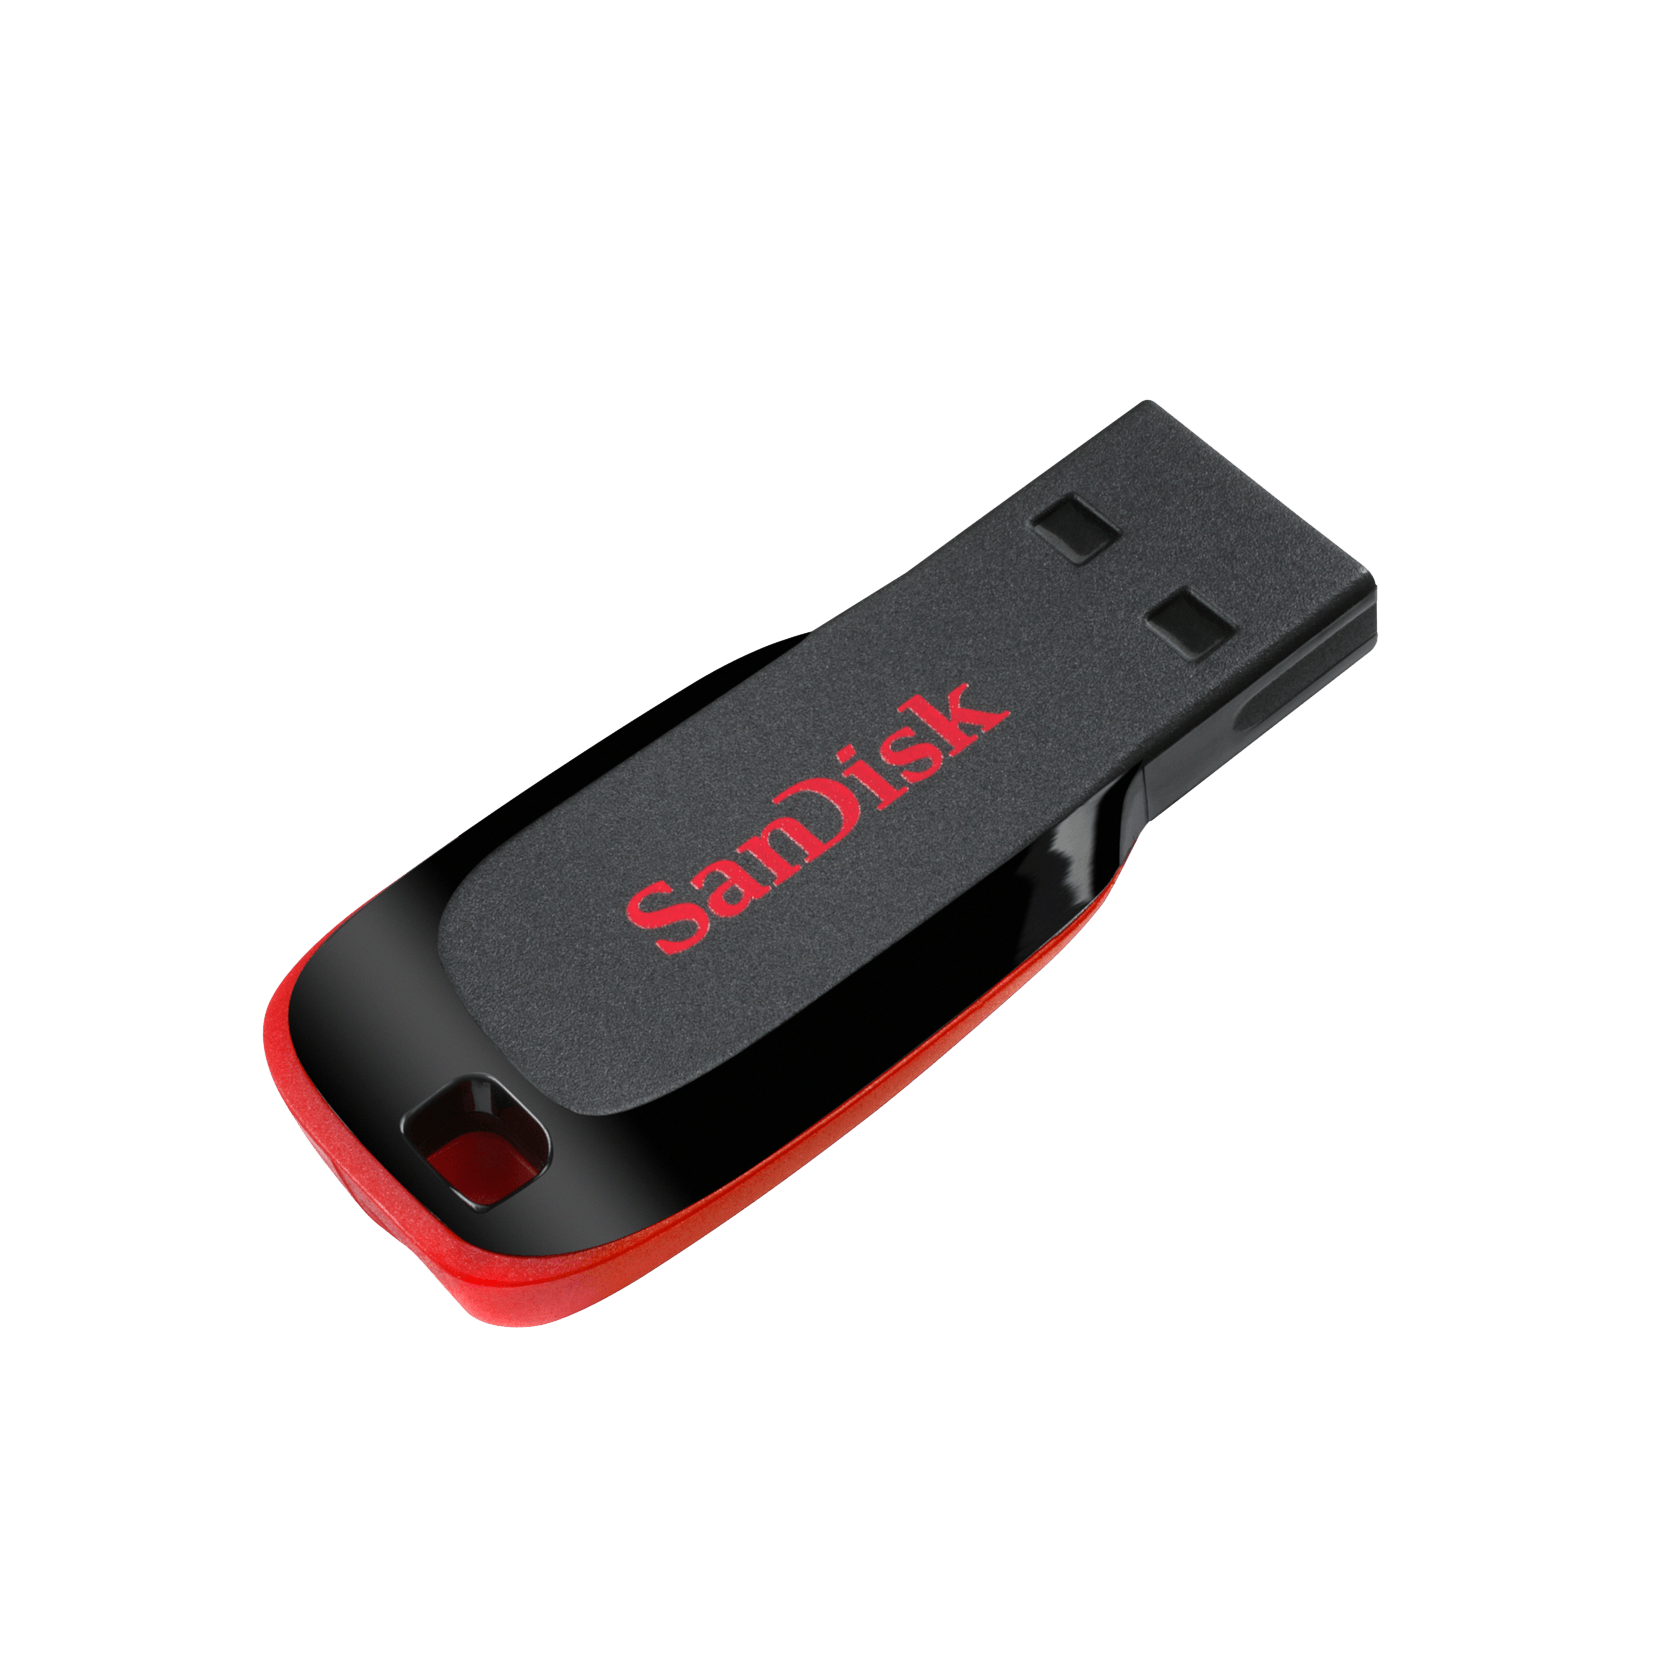 Sandisk Cruzer Blade 64Gb USB 2.0 Flash Drive